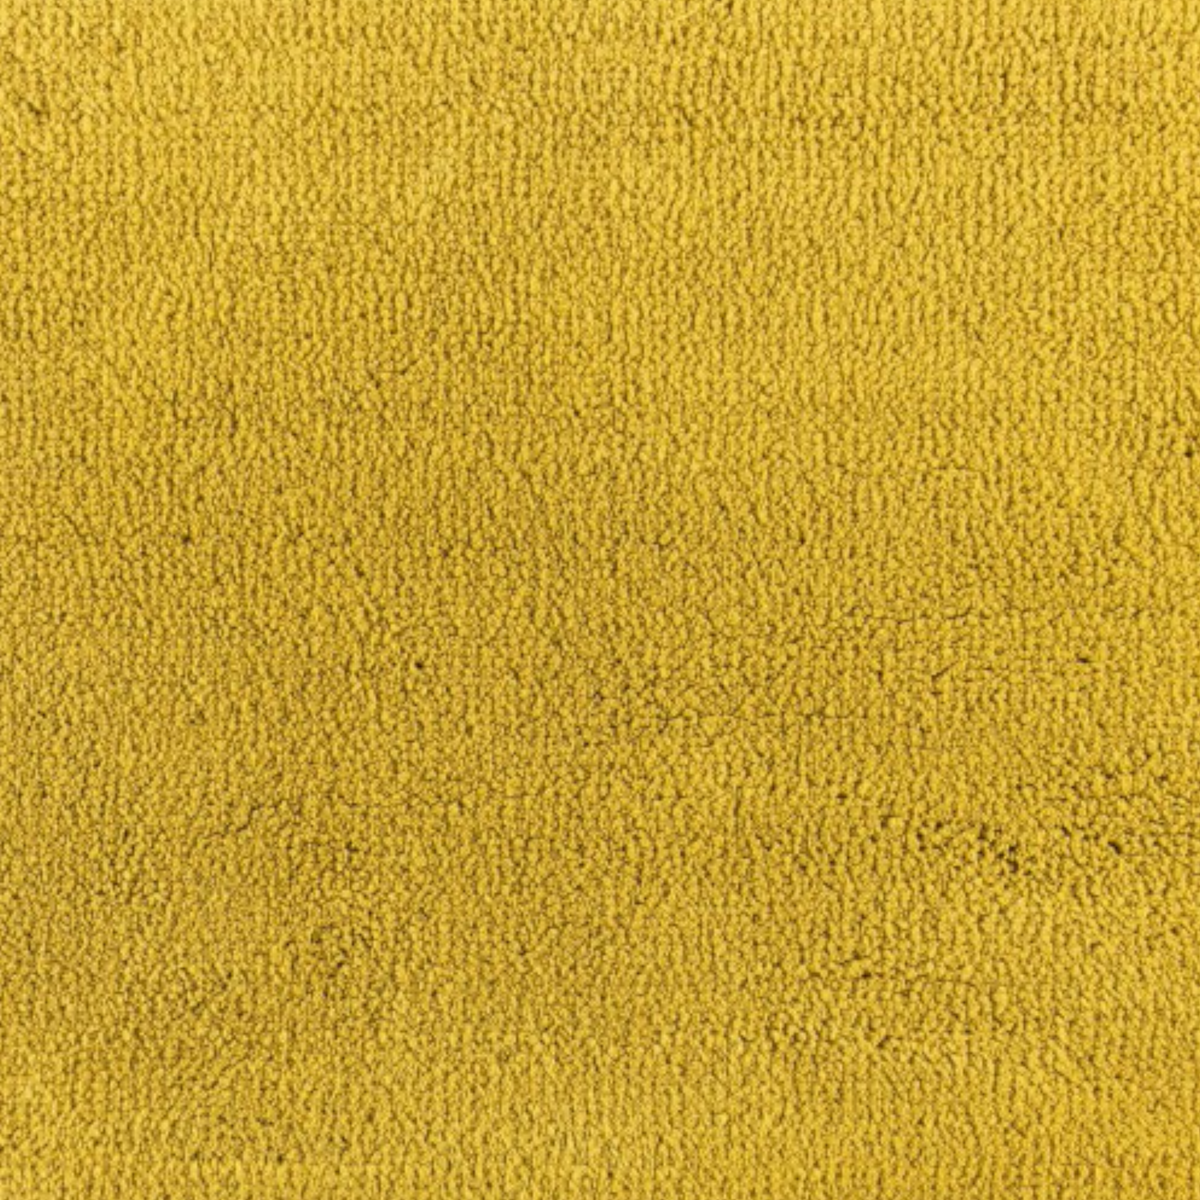 Fabric Closeup of Graccioza Cool Bath Rugs Mustard Color